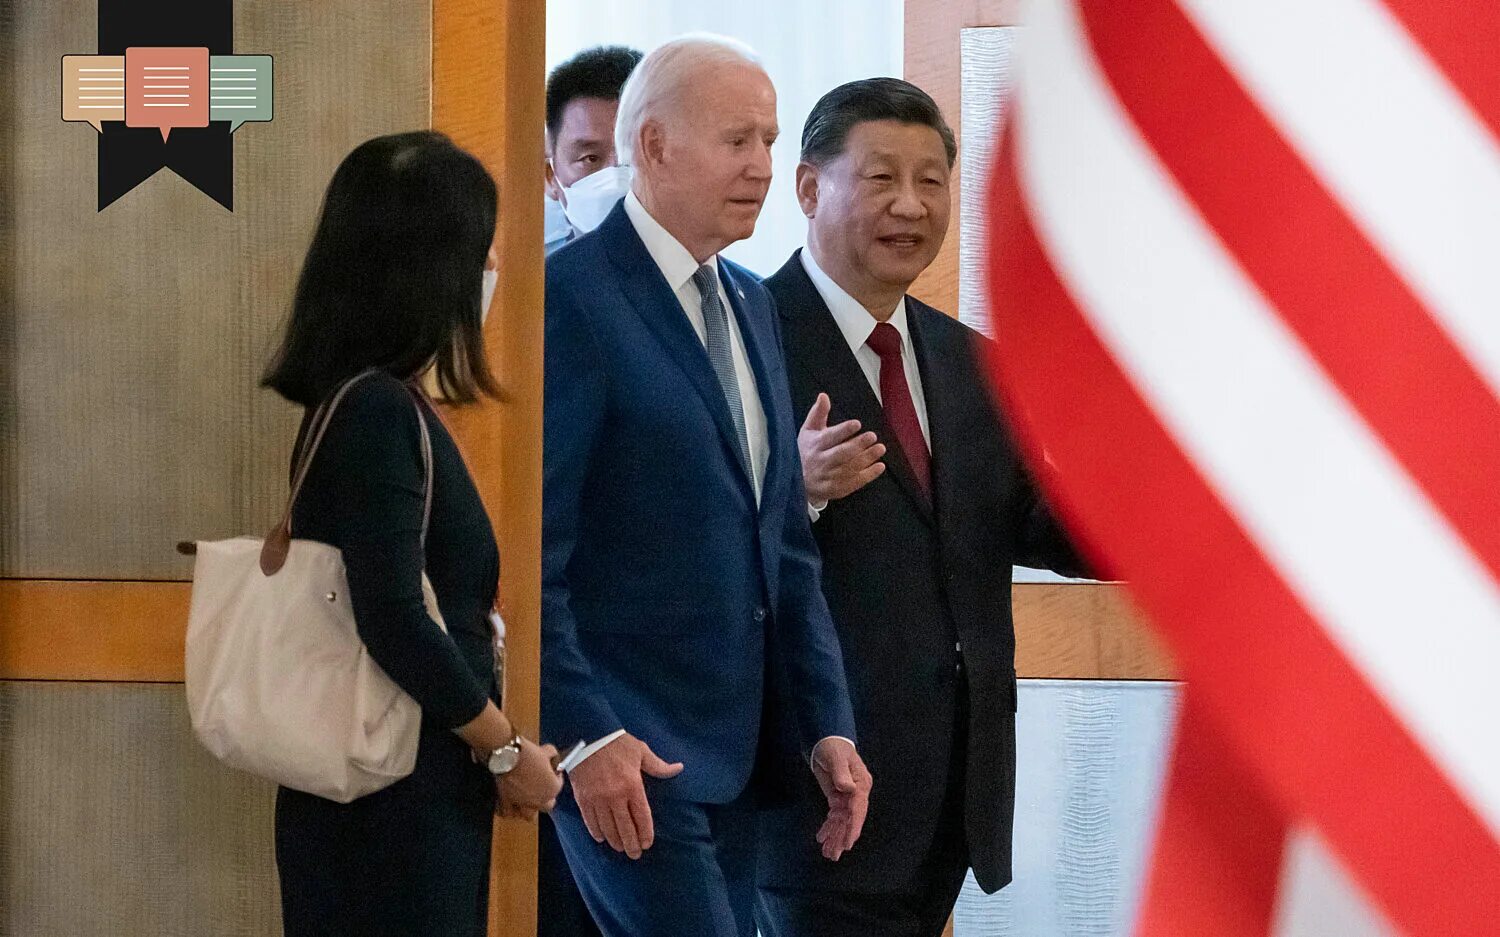 Байден и си цзиньпин встреча. Джо Байден си Цзиньпин g20. Си Цзиньпин встретился с Байденом. Встреча Байдена и китайского лидера на g20. Джо Байден встретится с си Цзиньпином.